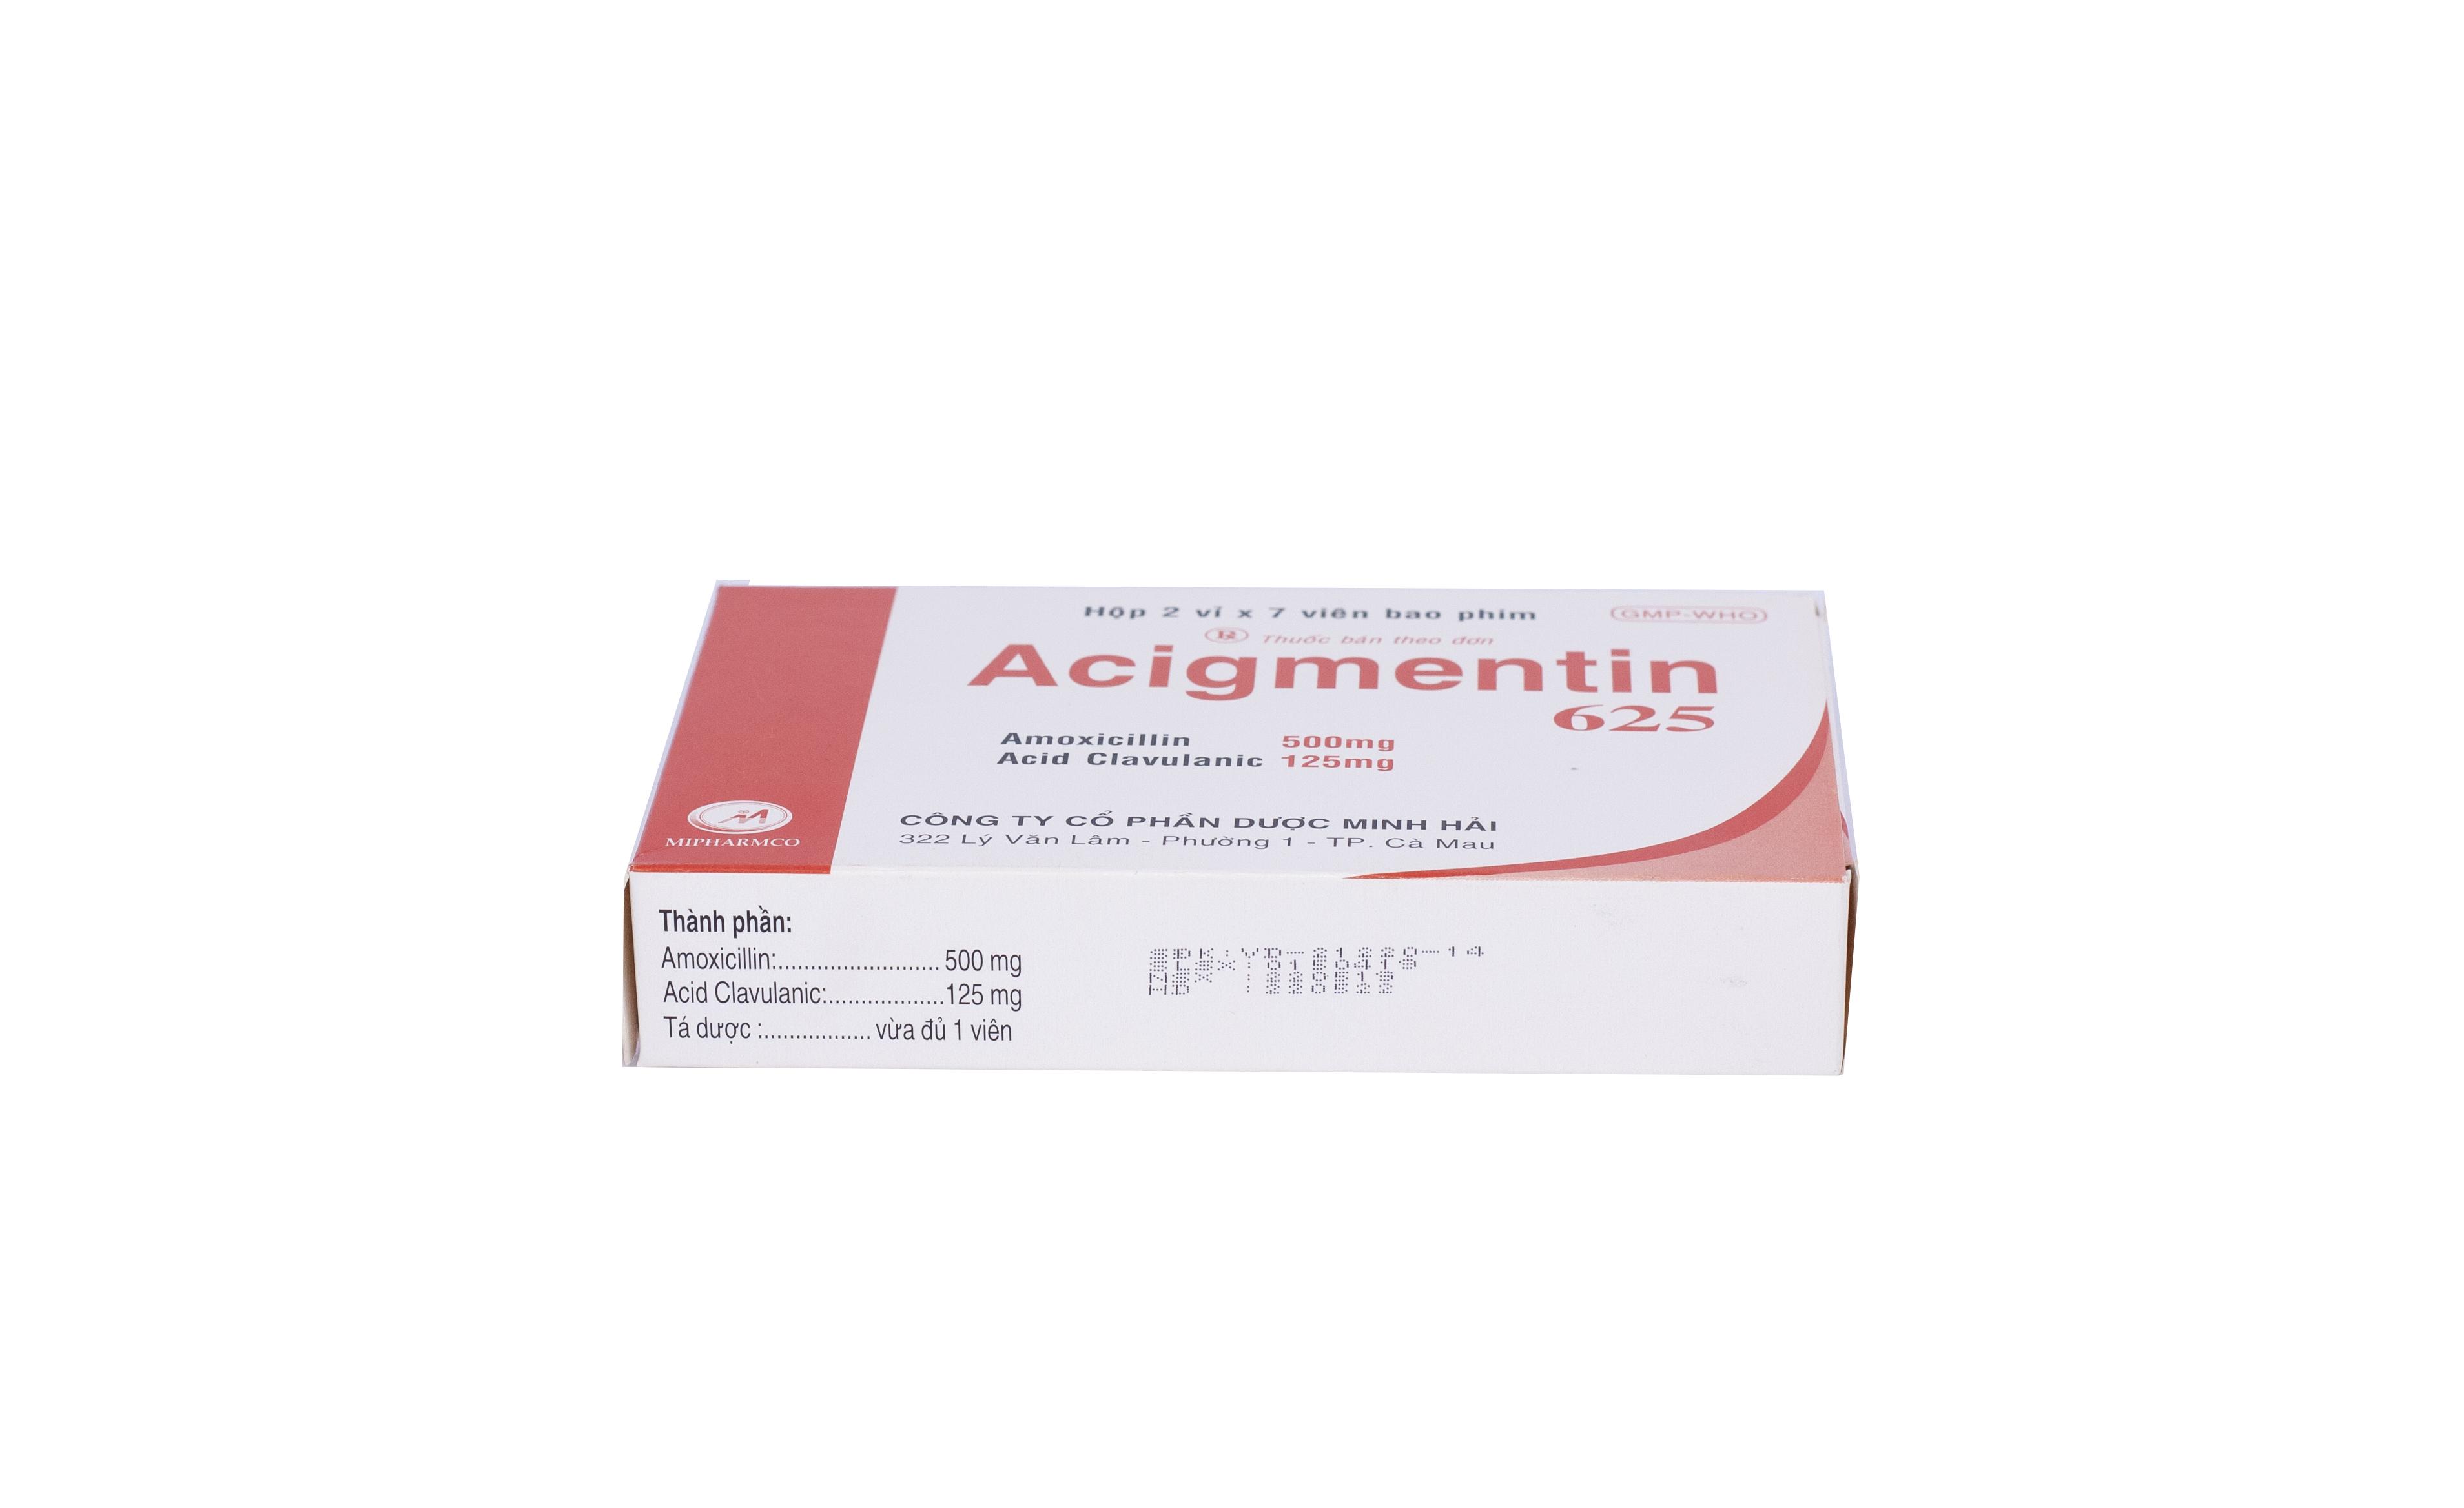 Acigmentin 625 (Amoxicillin, Acid Clavulanic) Minh Hải (H/14v)